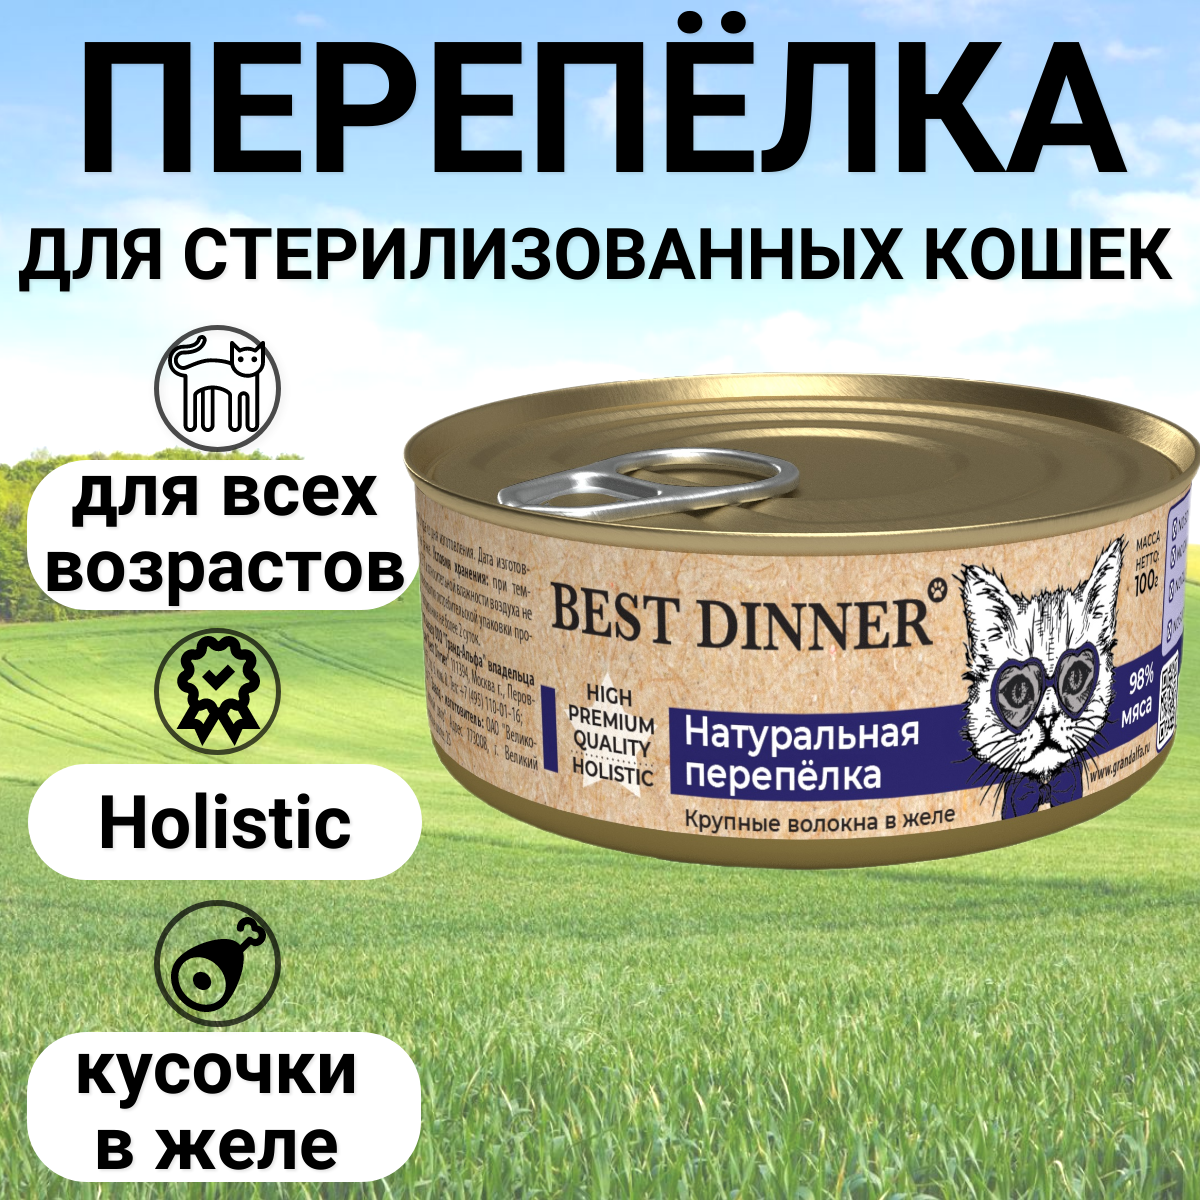 Влажный корм BEST DINNER Для кошек, натуральная перепёлка 100гр